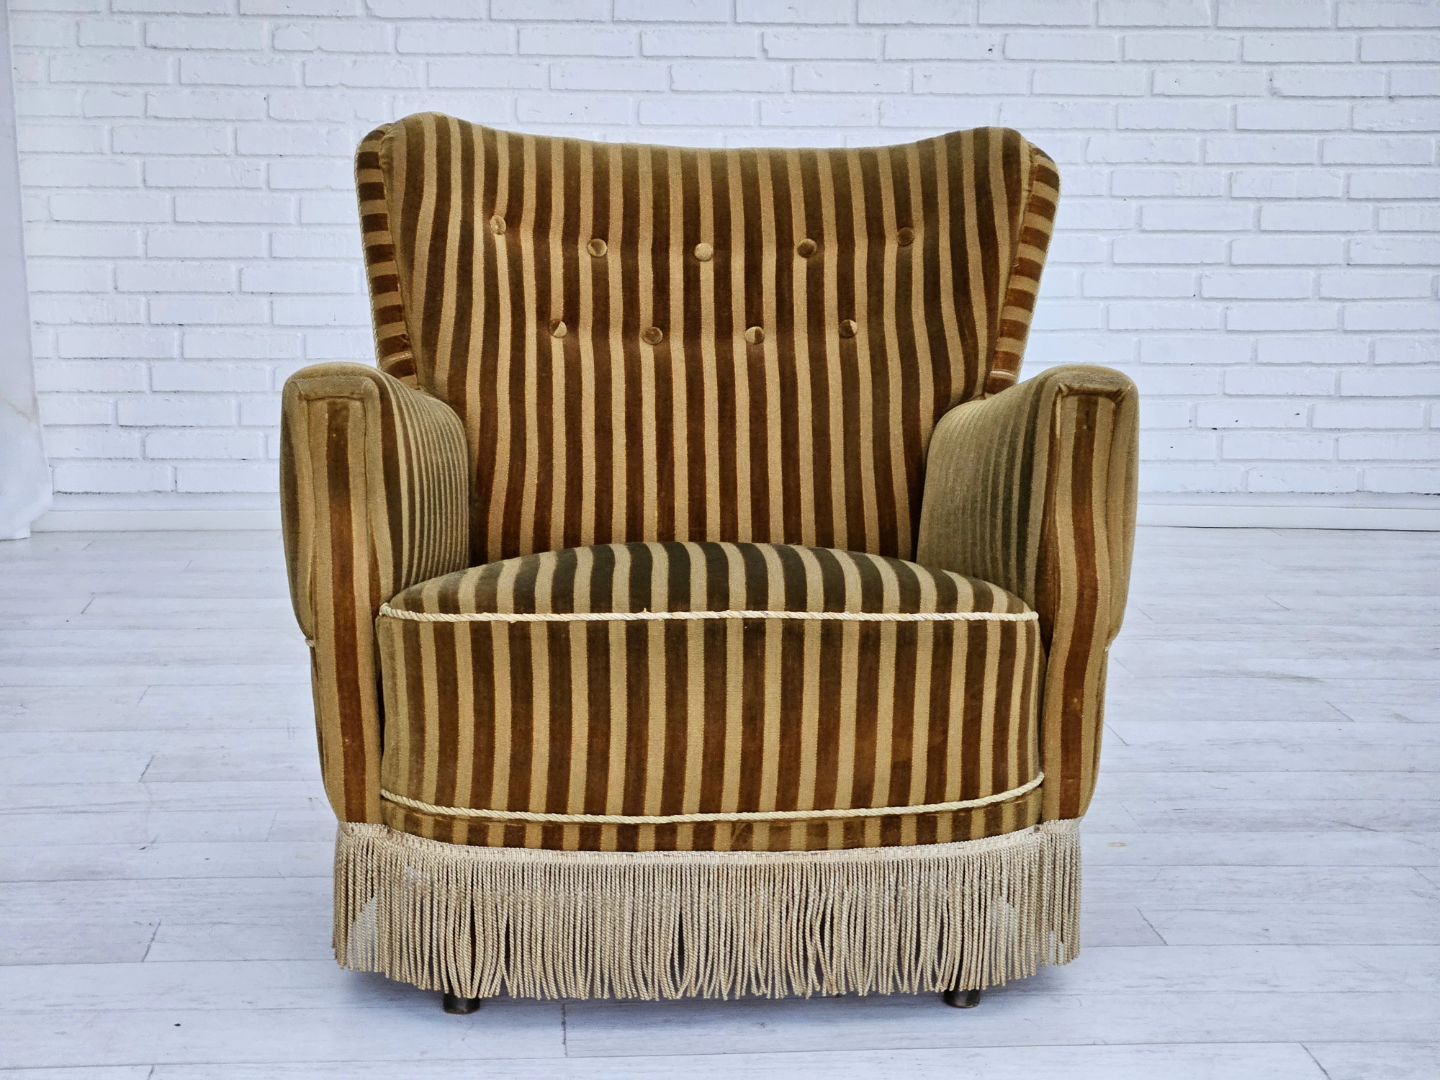 1960s, Danish relax chair, original upholstery, green velour.